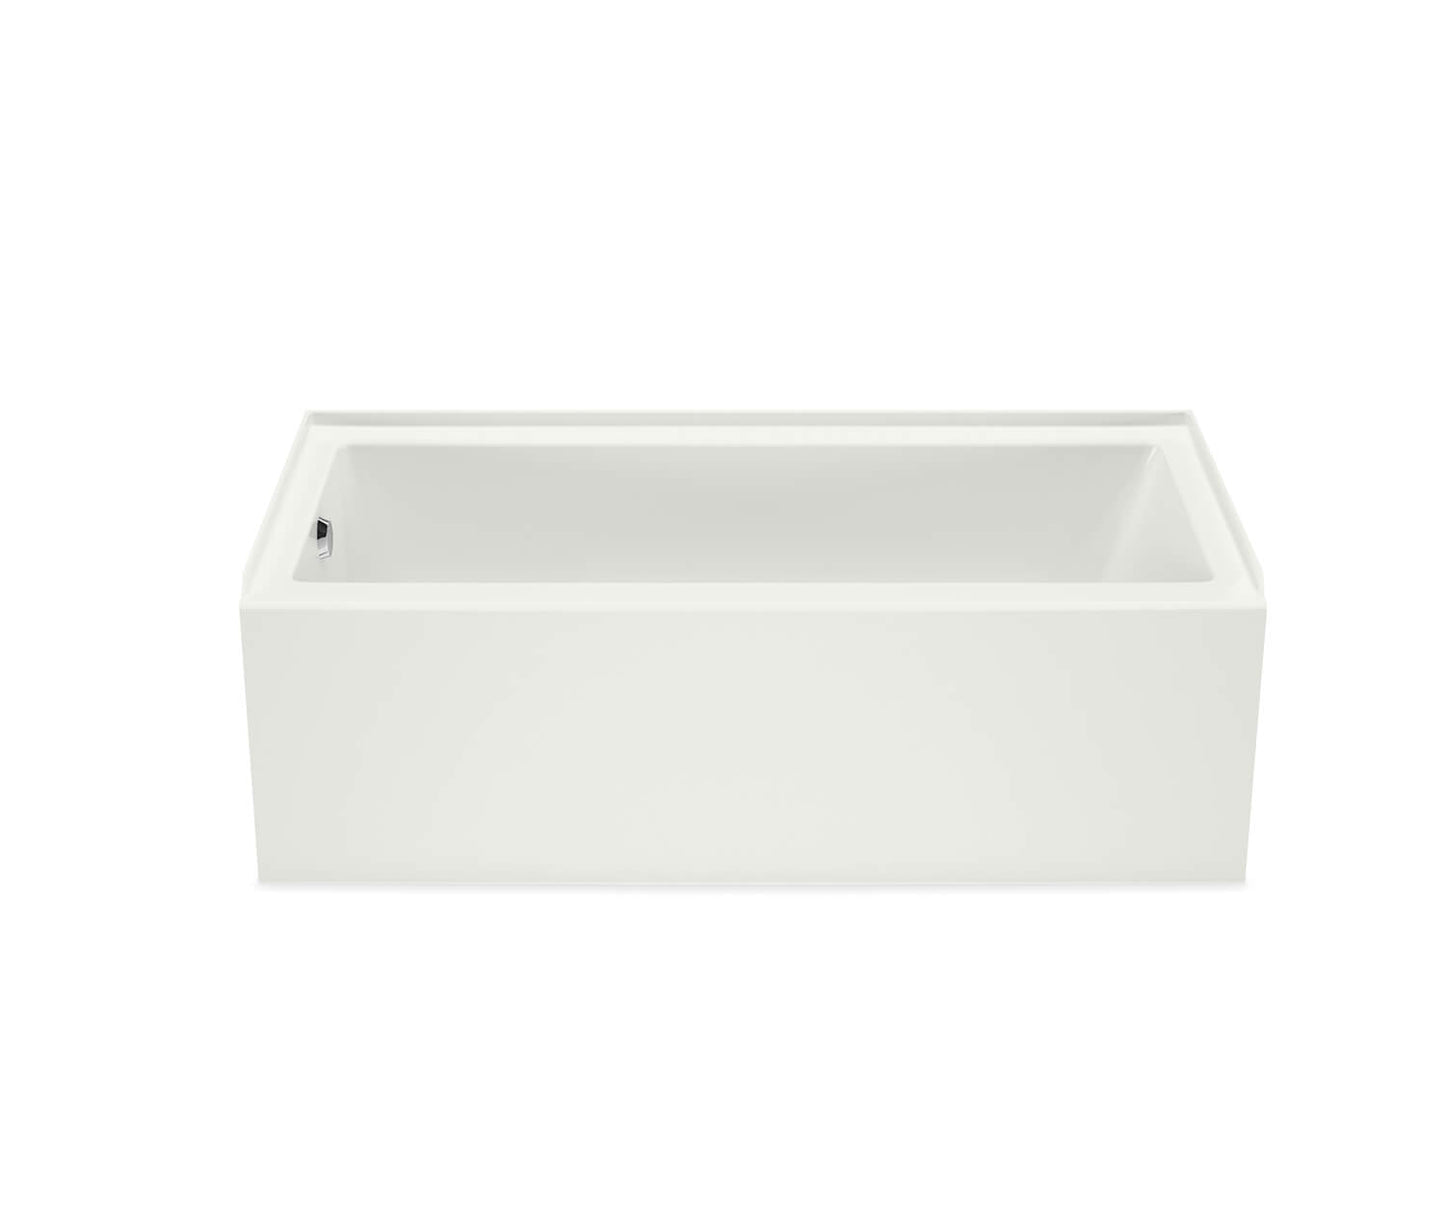 Maax Bosca 6030 IFS Acrylic Alcove Left-Hand Drain Bathtub in White